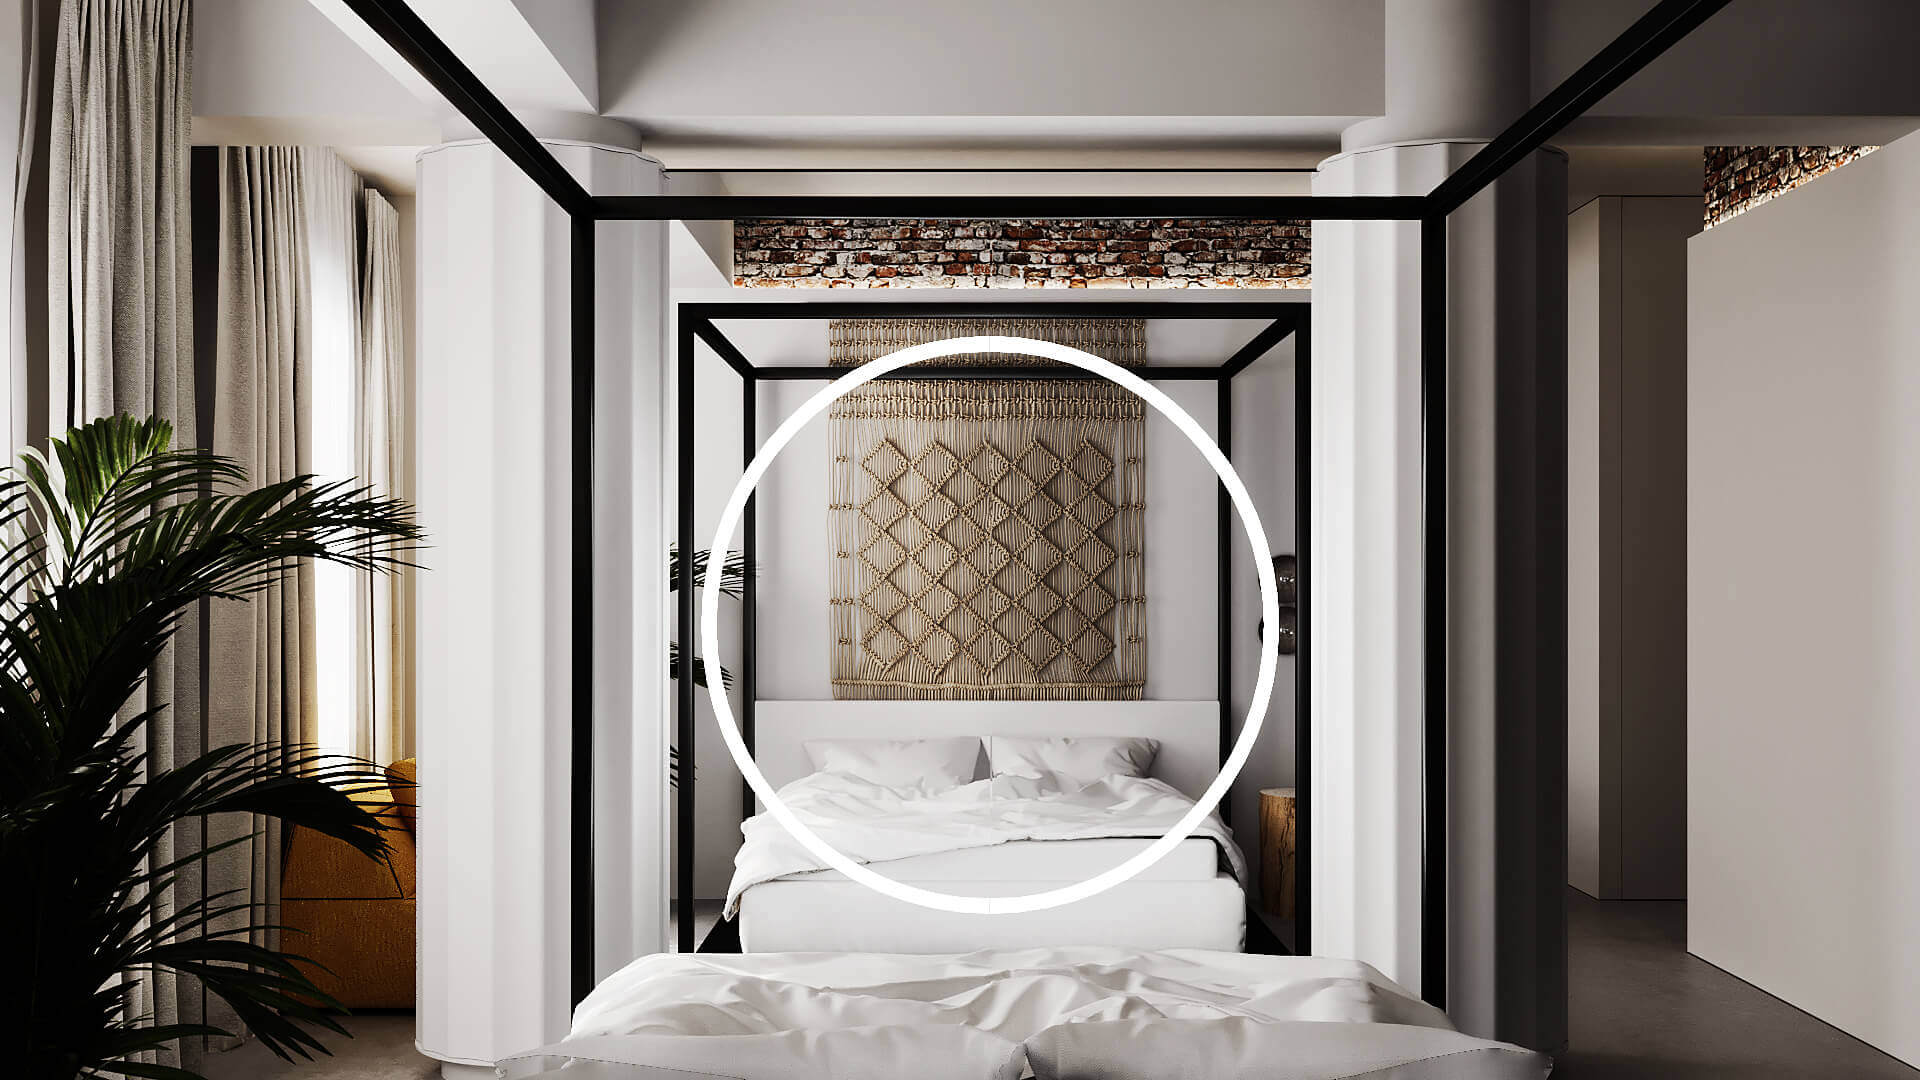 Oasis Apartment bedroom design round led light - cgi visualization